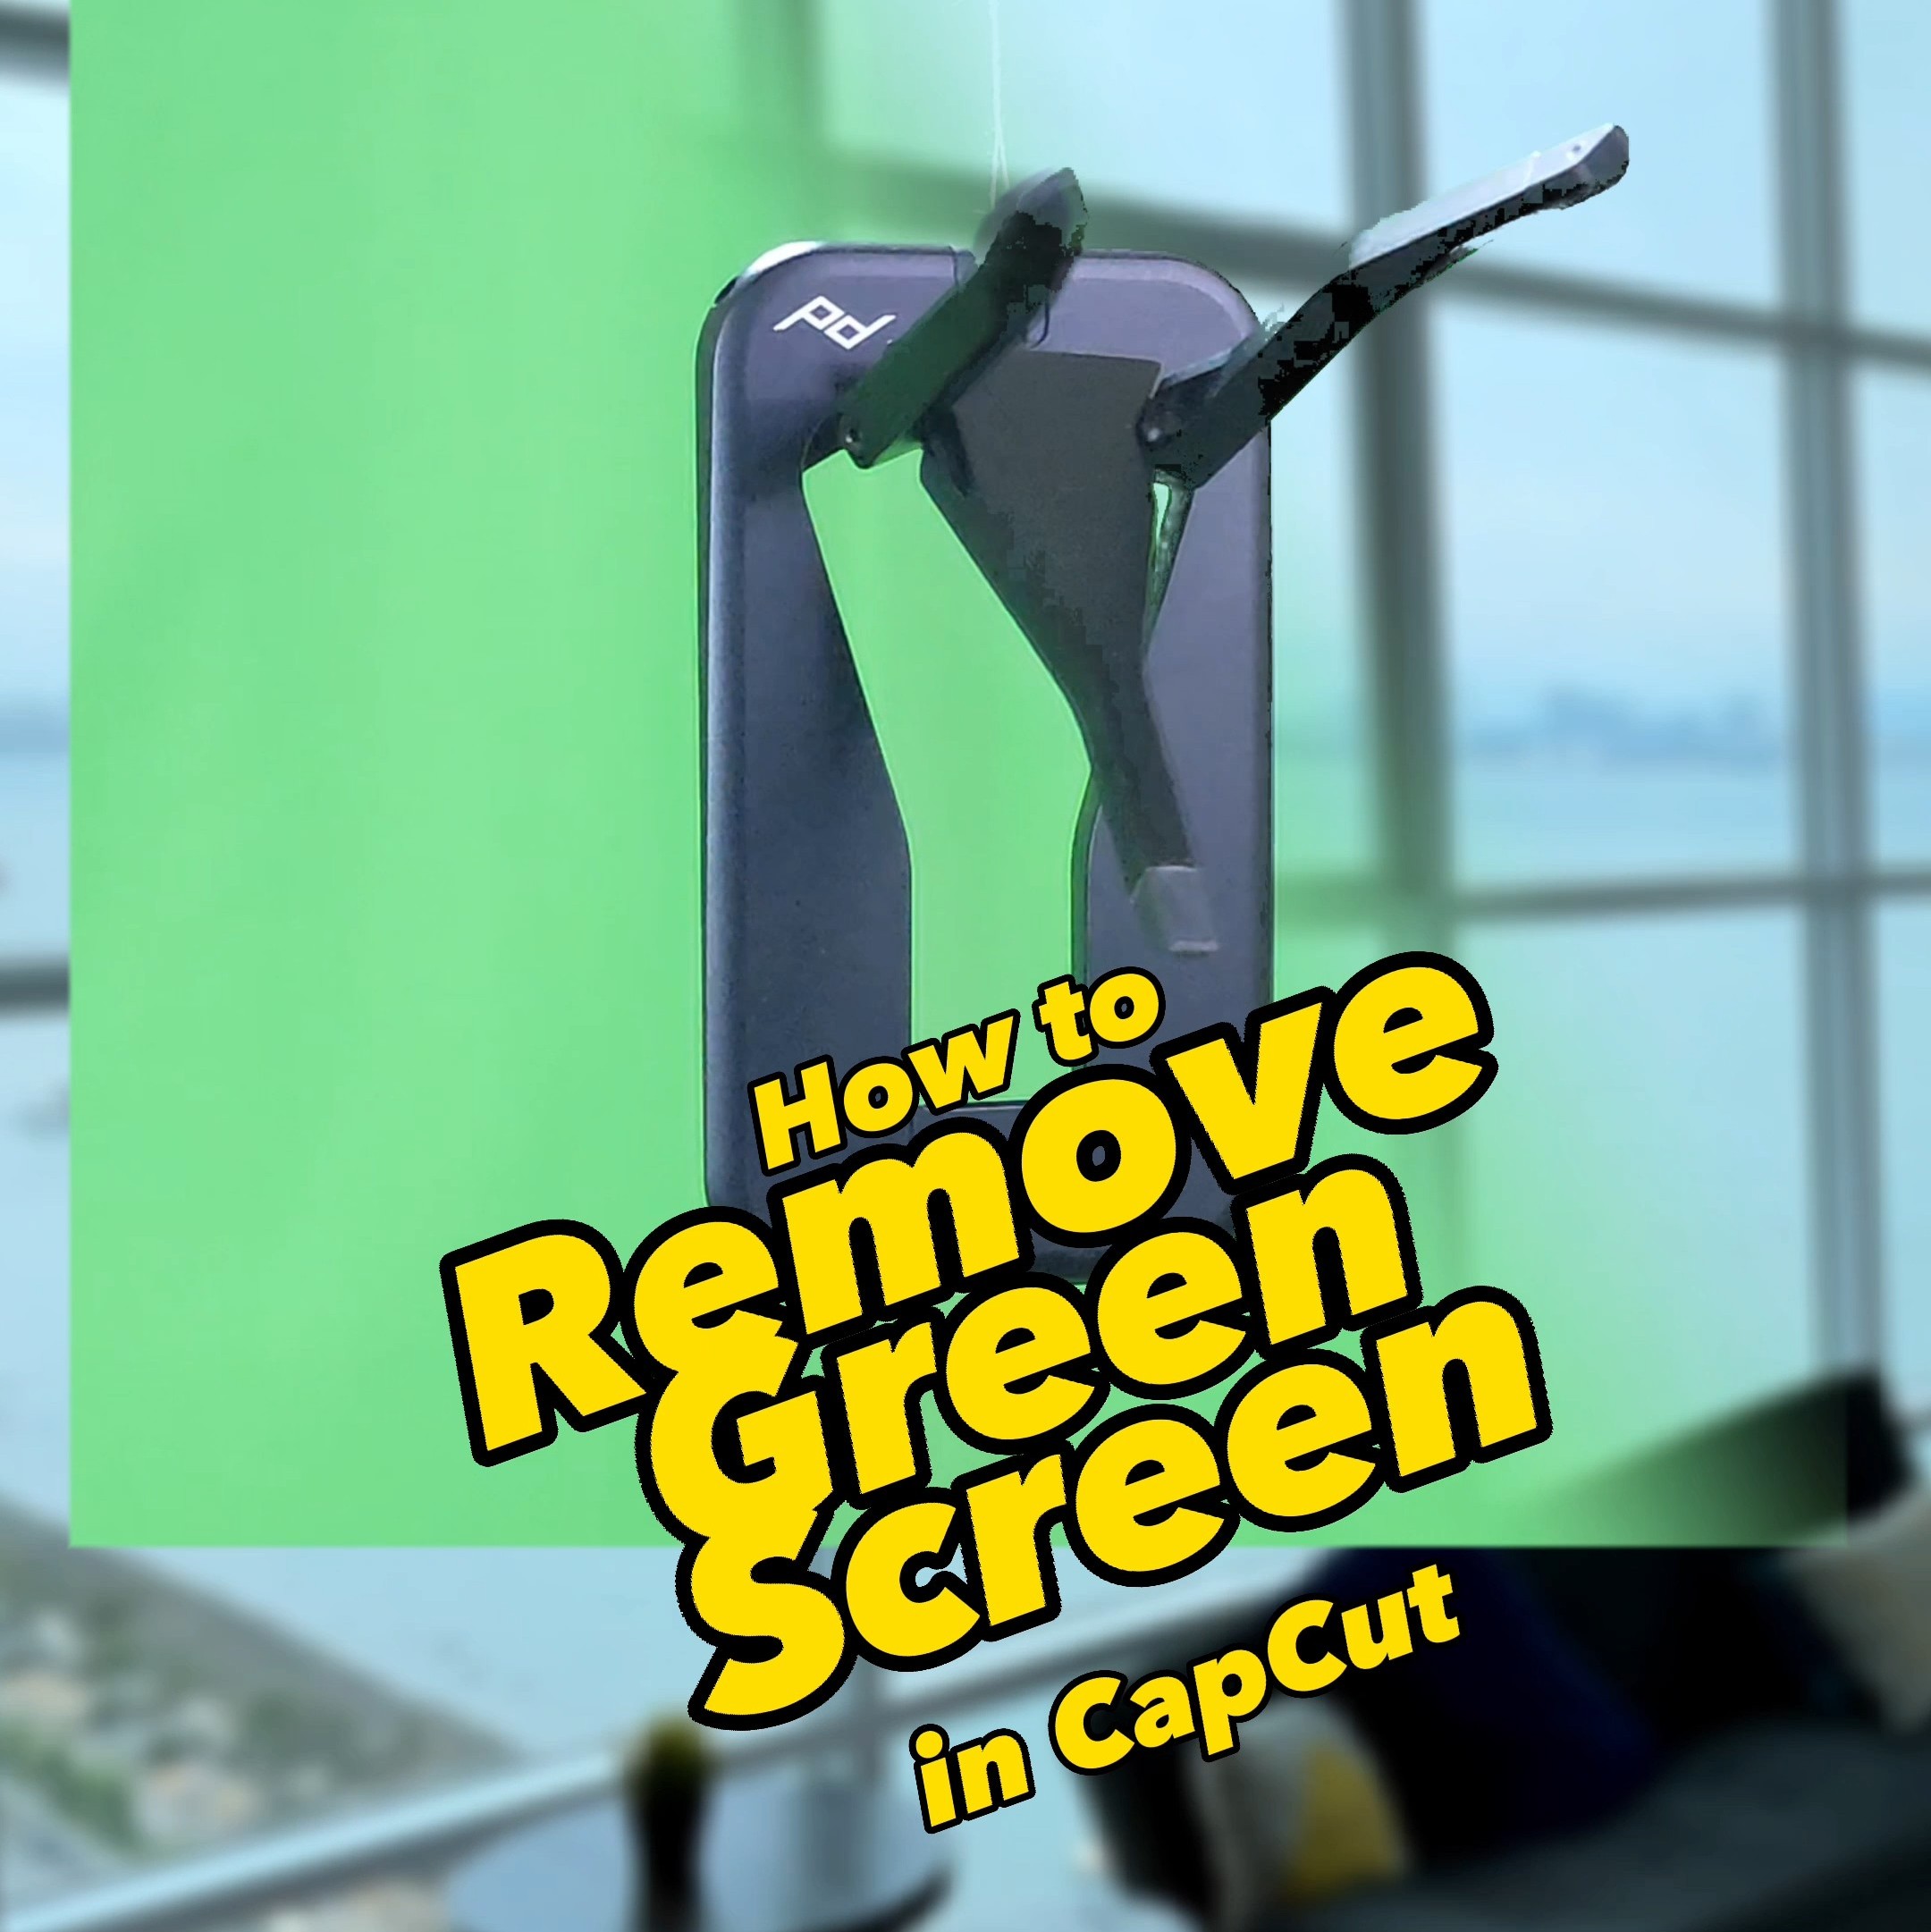 removing-green-screen-in-capcut-adrian-video-image